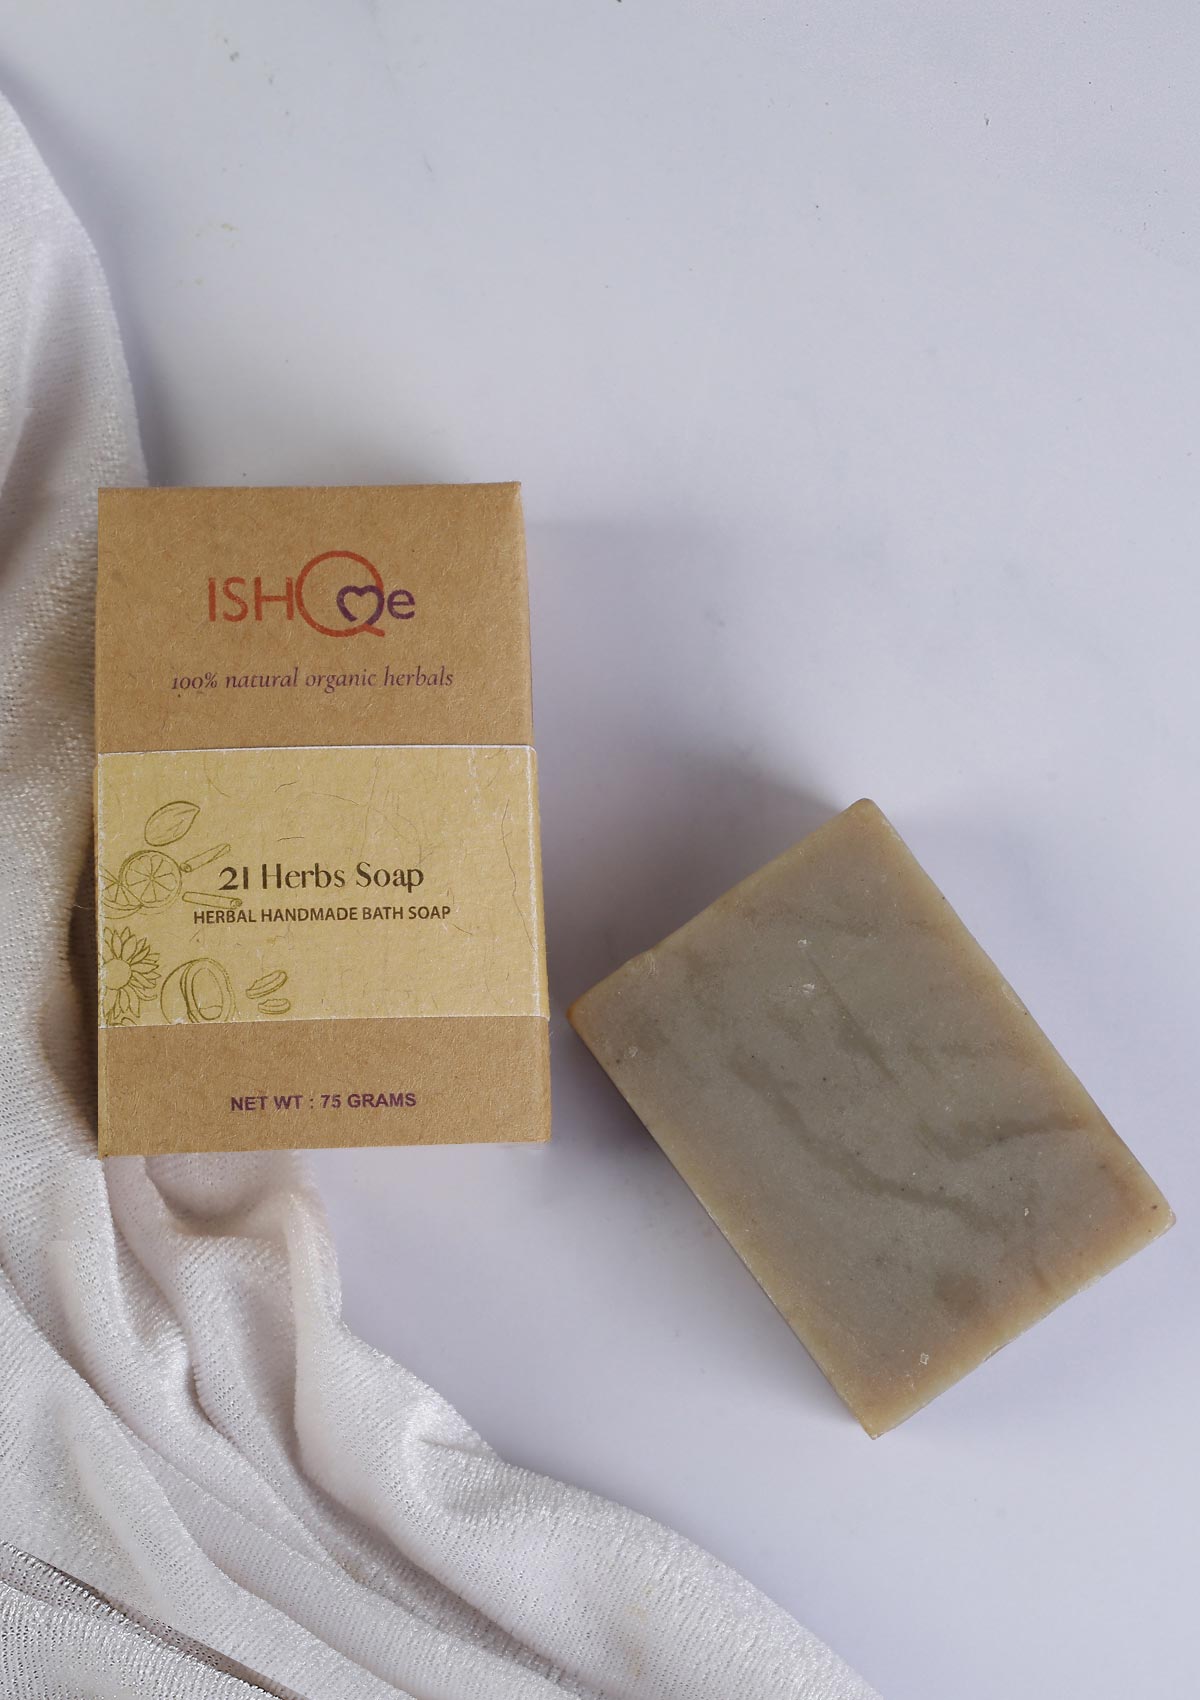 Turmeric and 21 Herbs soap & Soap dish - IshqMe